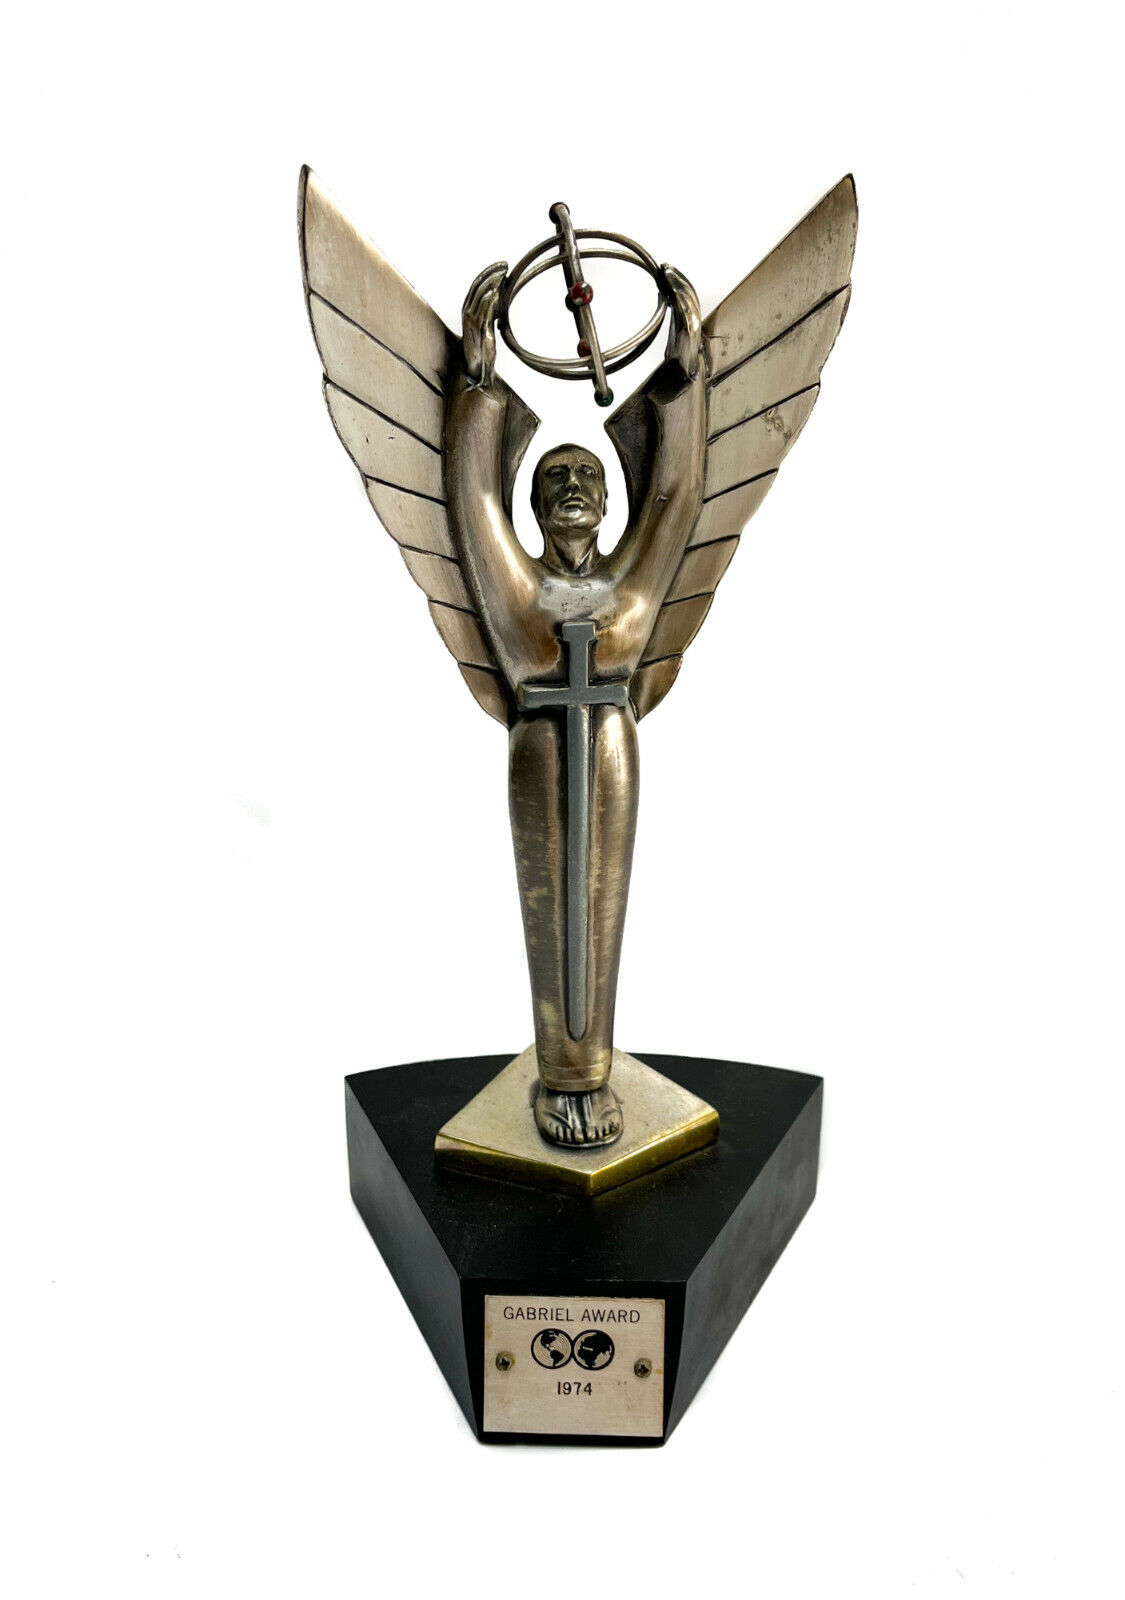 Gabriel Award Statue, 1974, Award for Catholic Broadcasting